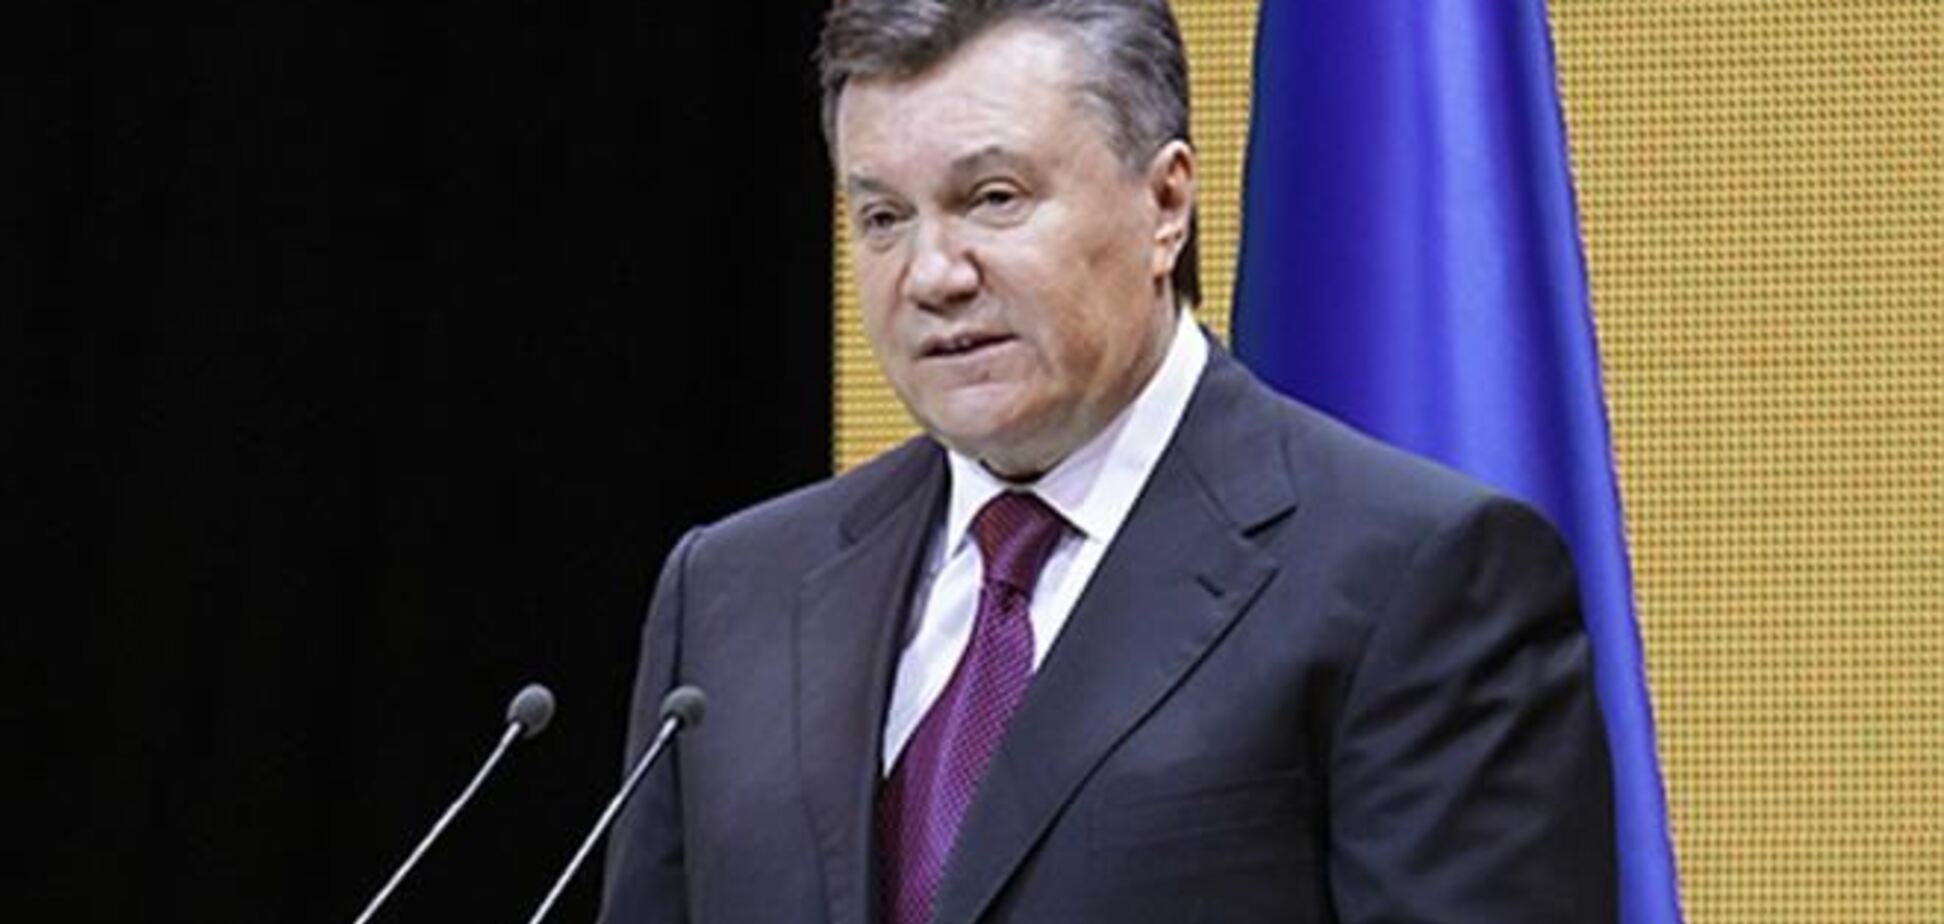 Янукович поздравил украинских милиционеров и вручил ордена